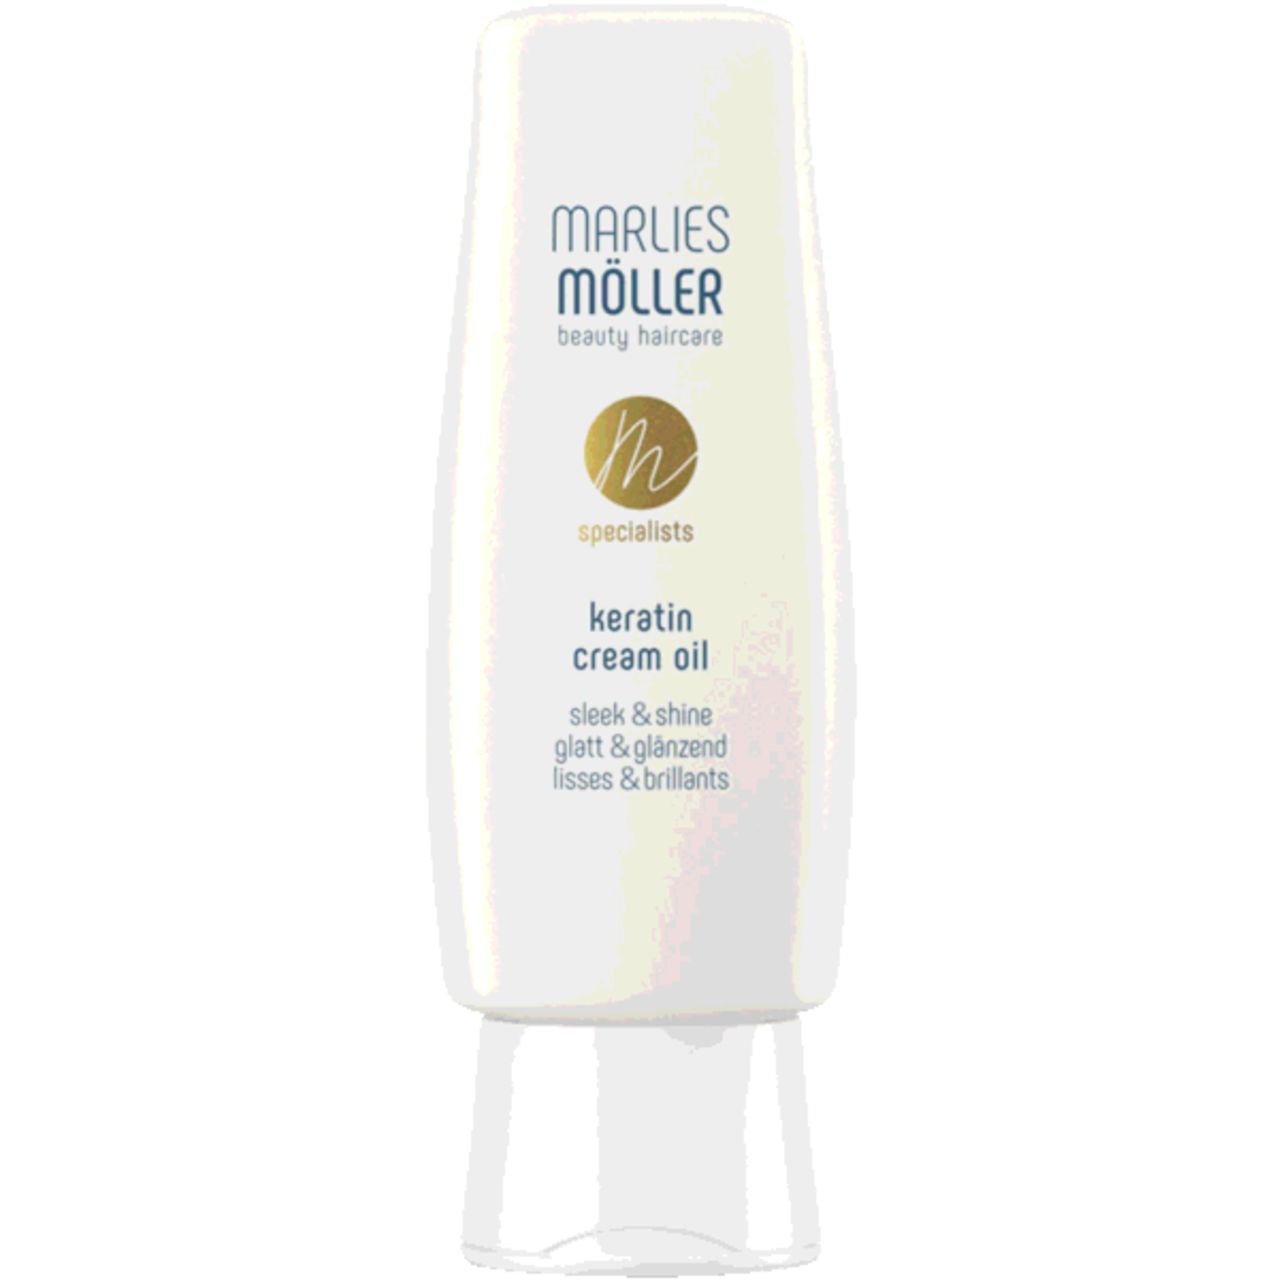 Marlies Möller beauty haircare Keratin Cream Oil Sleek & Shine